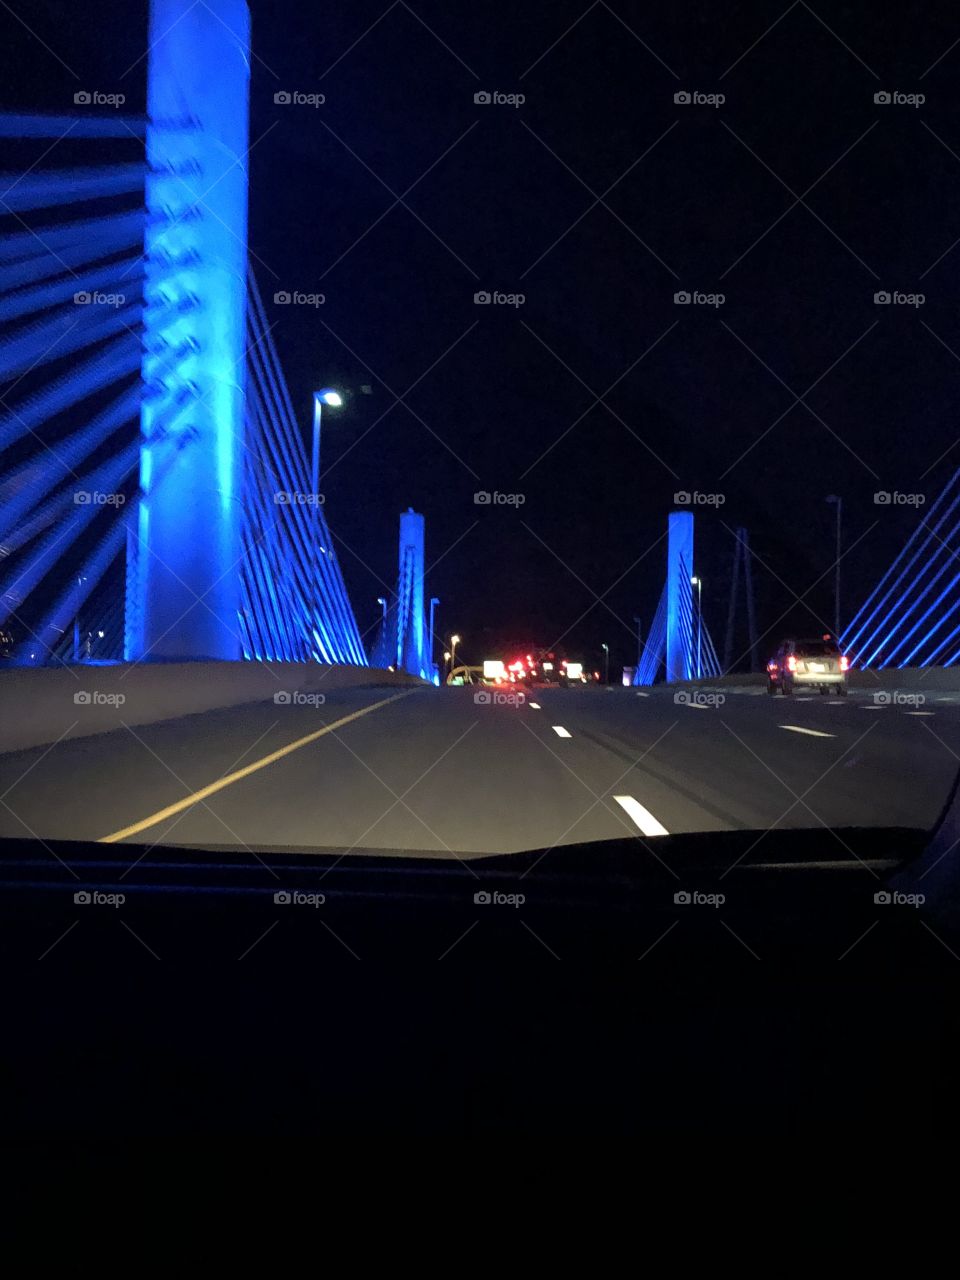 Lights of a bridge